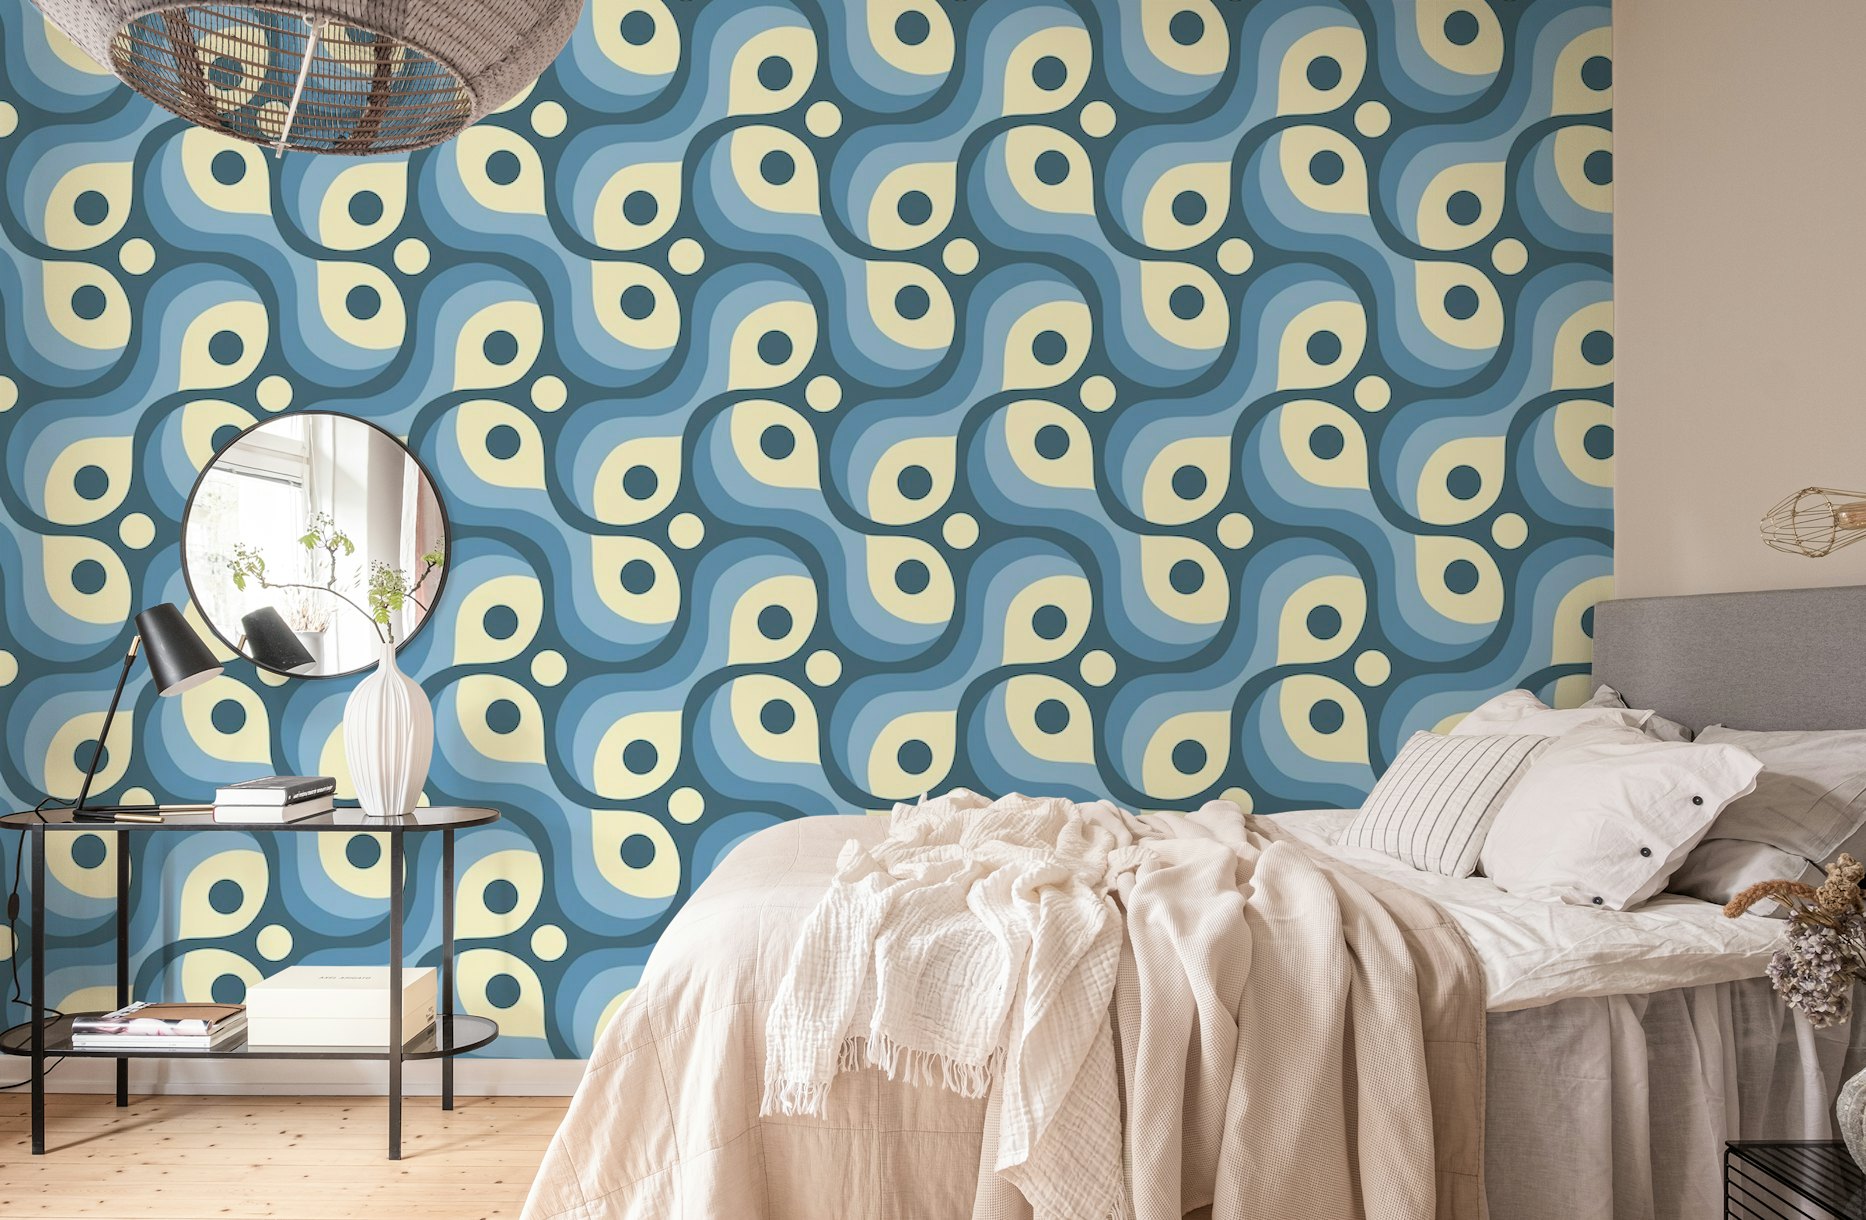 2201 Blue retro pattern wallpaper